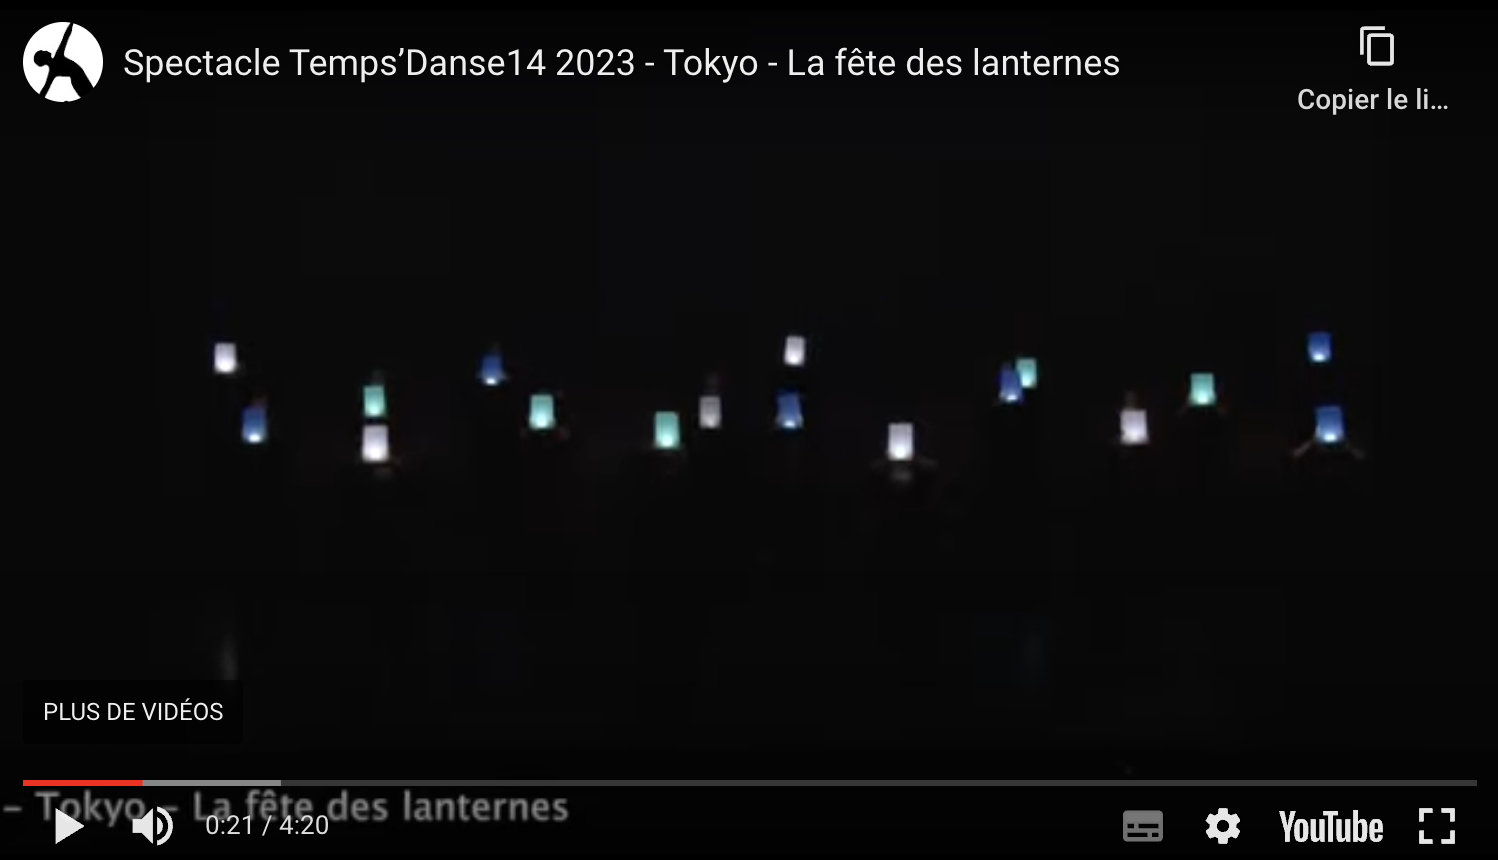 Tokyo - La fête des lanternes